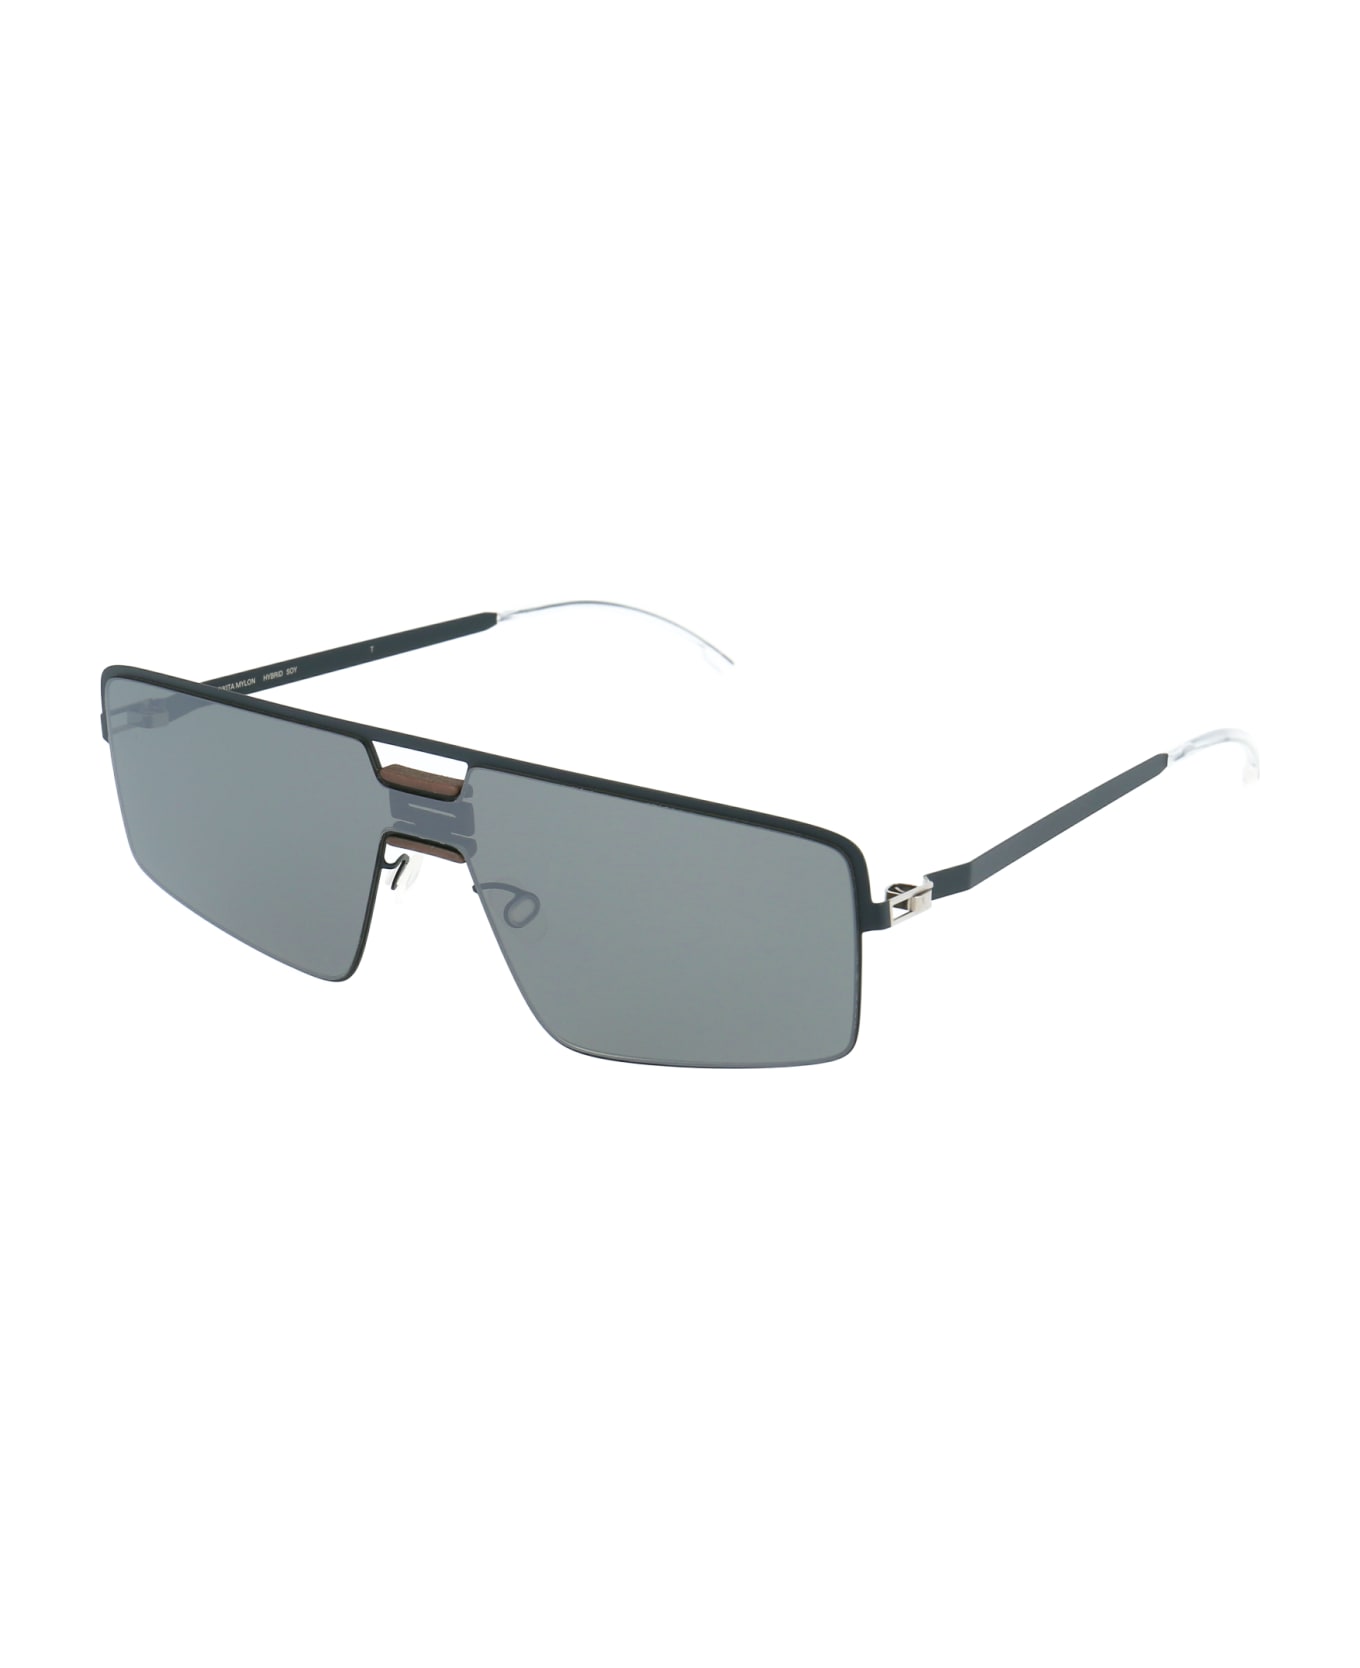 Mykita Soy Sunglasses - 472 MH50 Taupe Grey/Indigo Silver Flash Shield